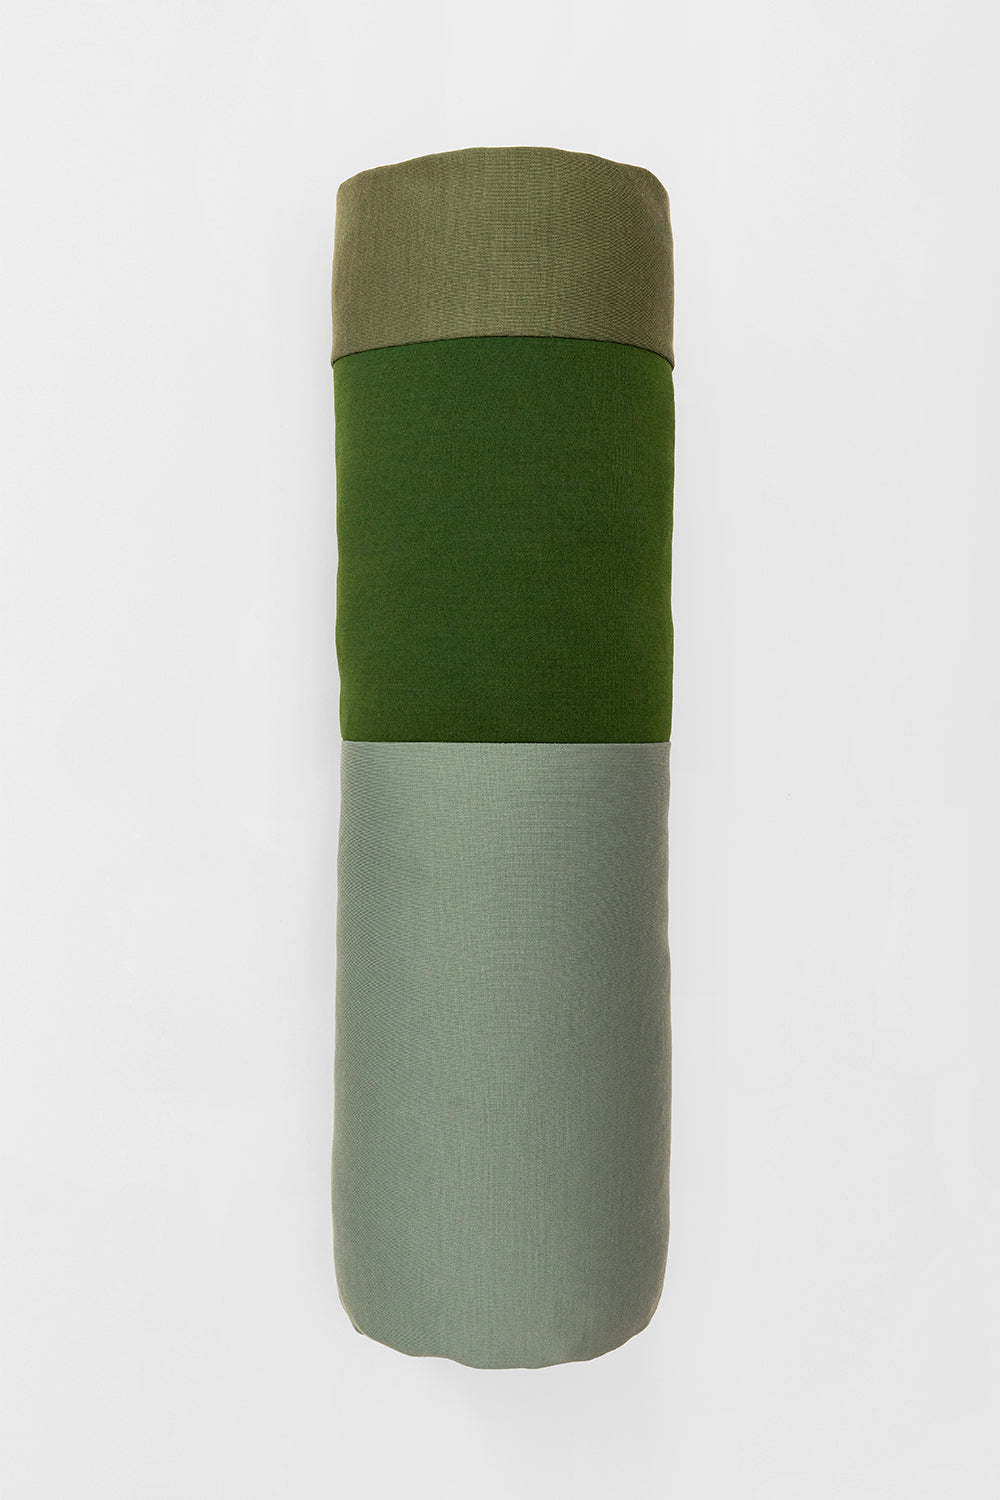 LINE – Medium – Mid Green / Dark Green / Greyish Green